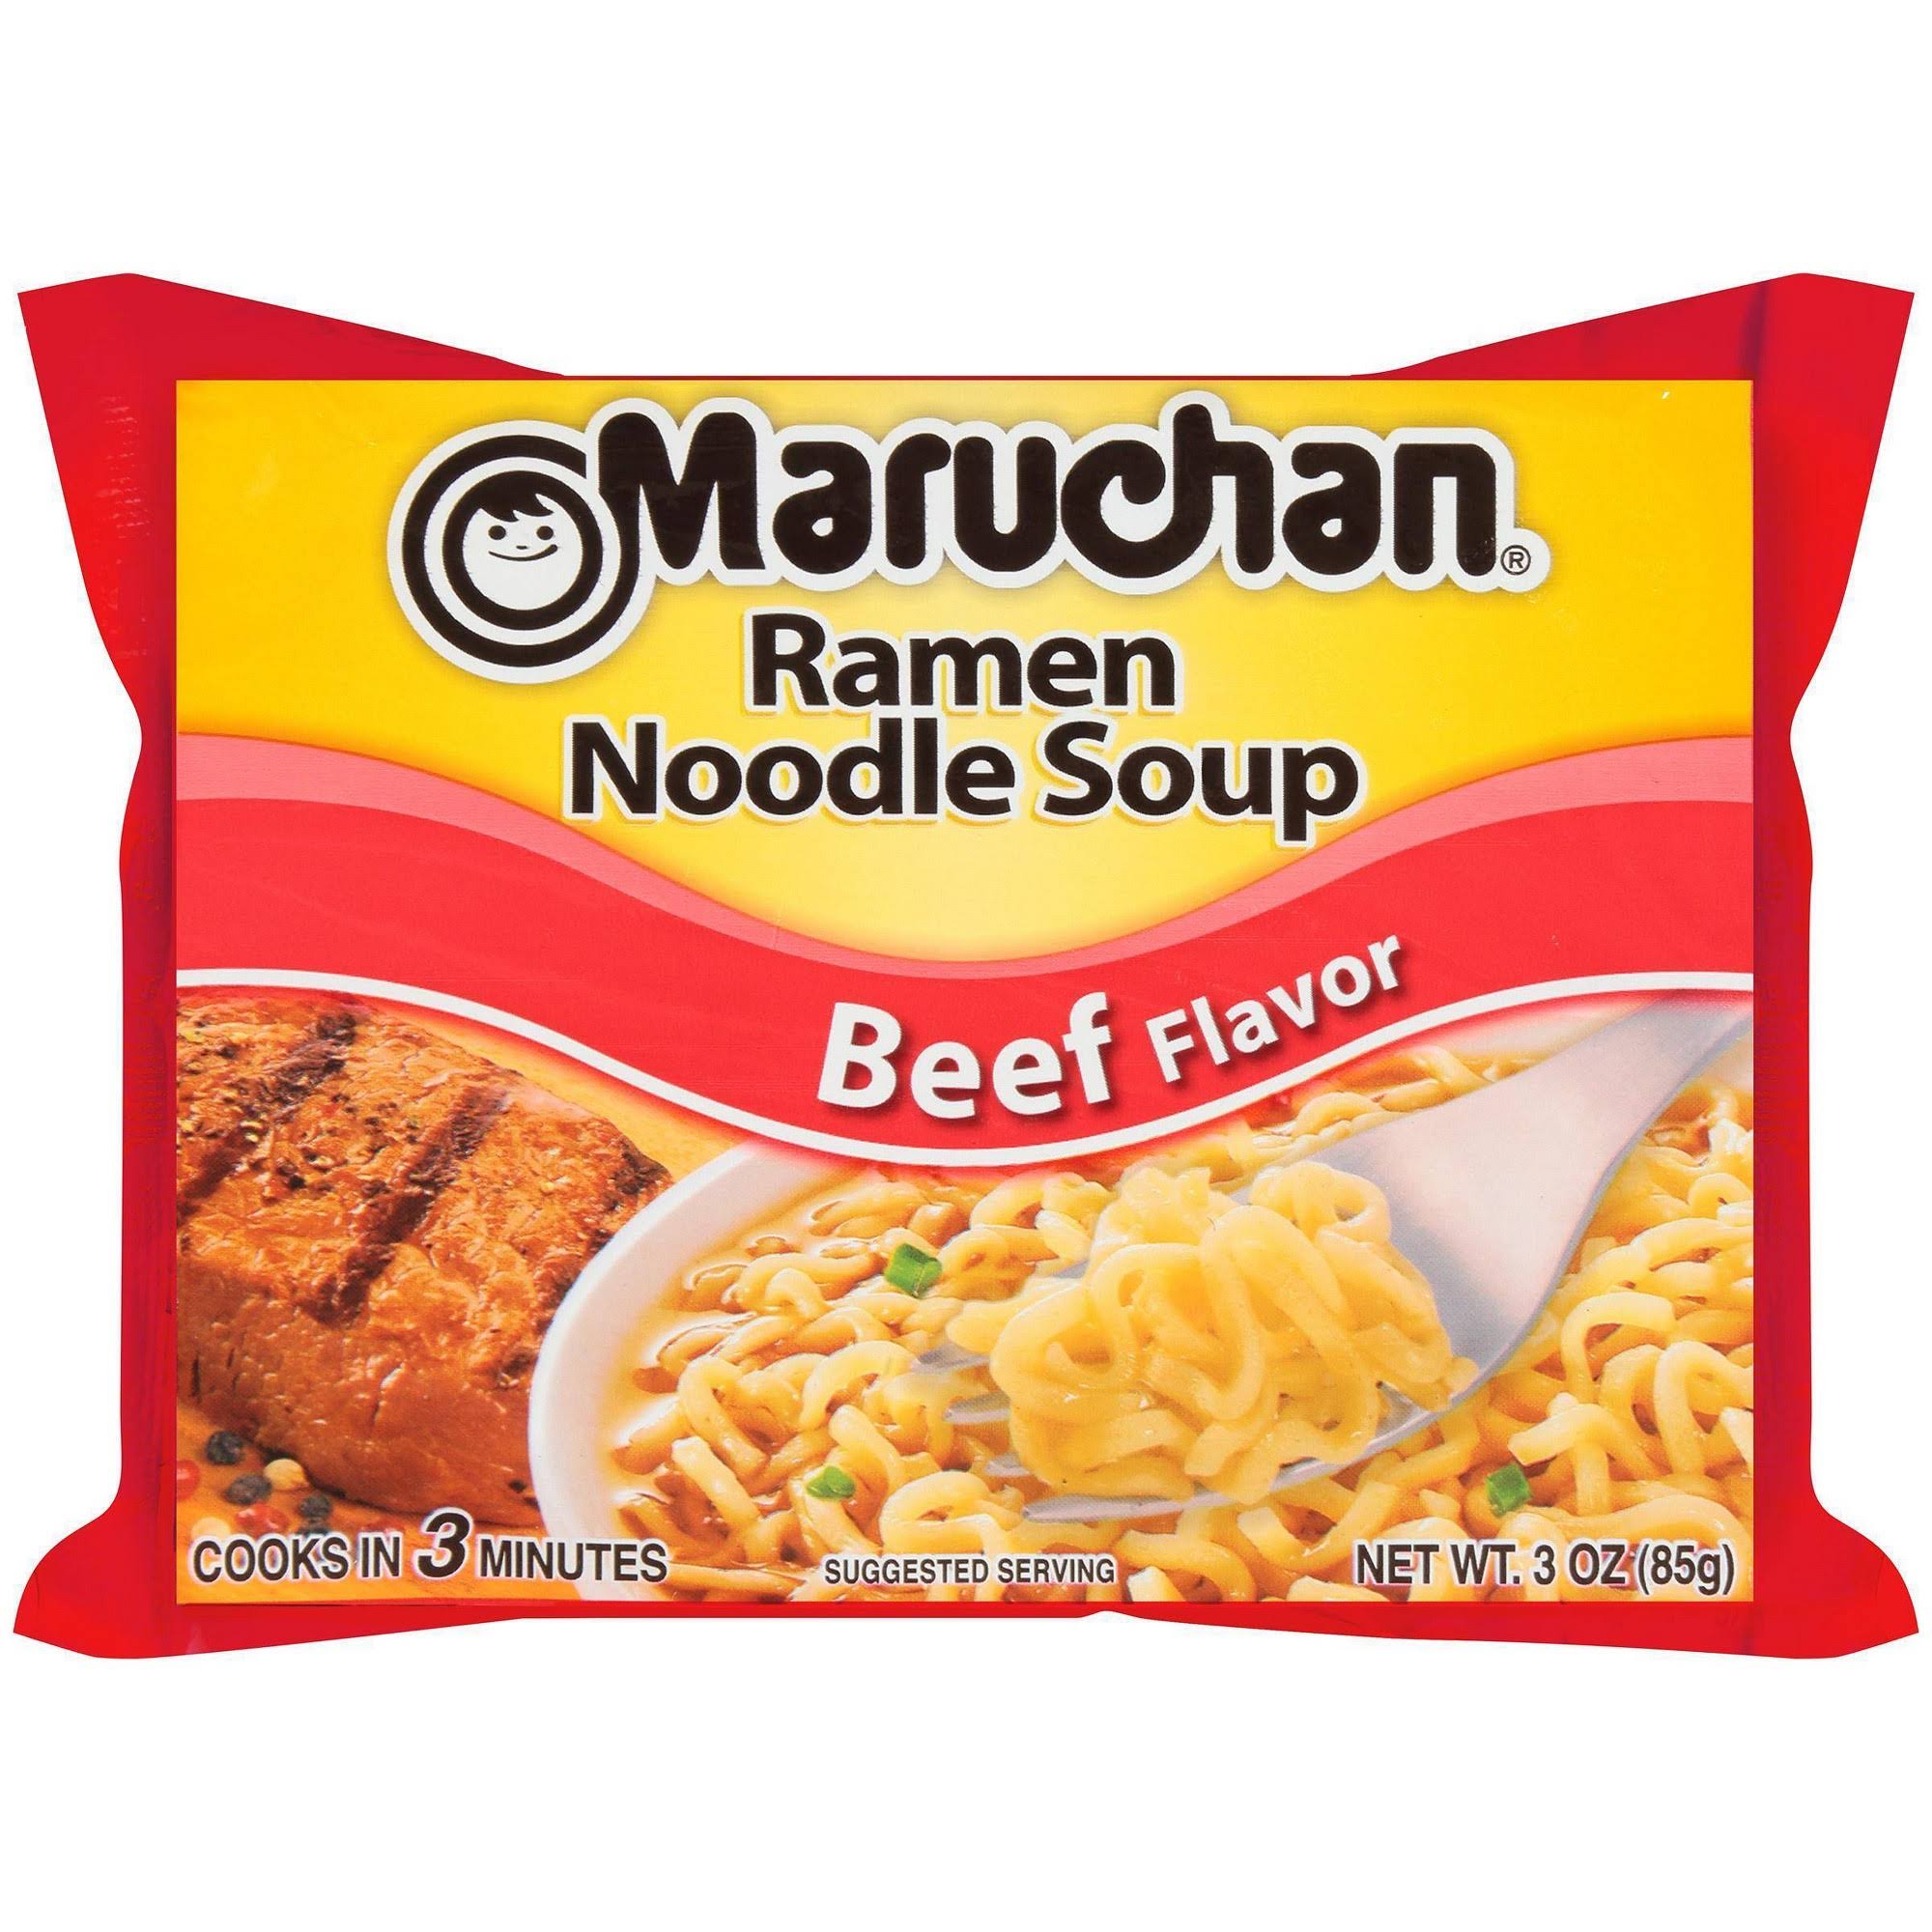 Maruchan Ramen Noodle Soup - 3oz, Beef Flavor